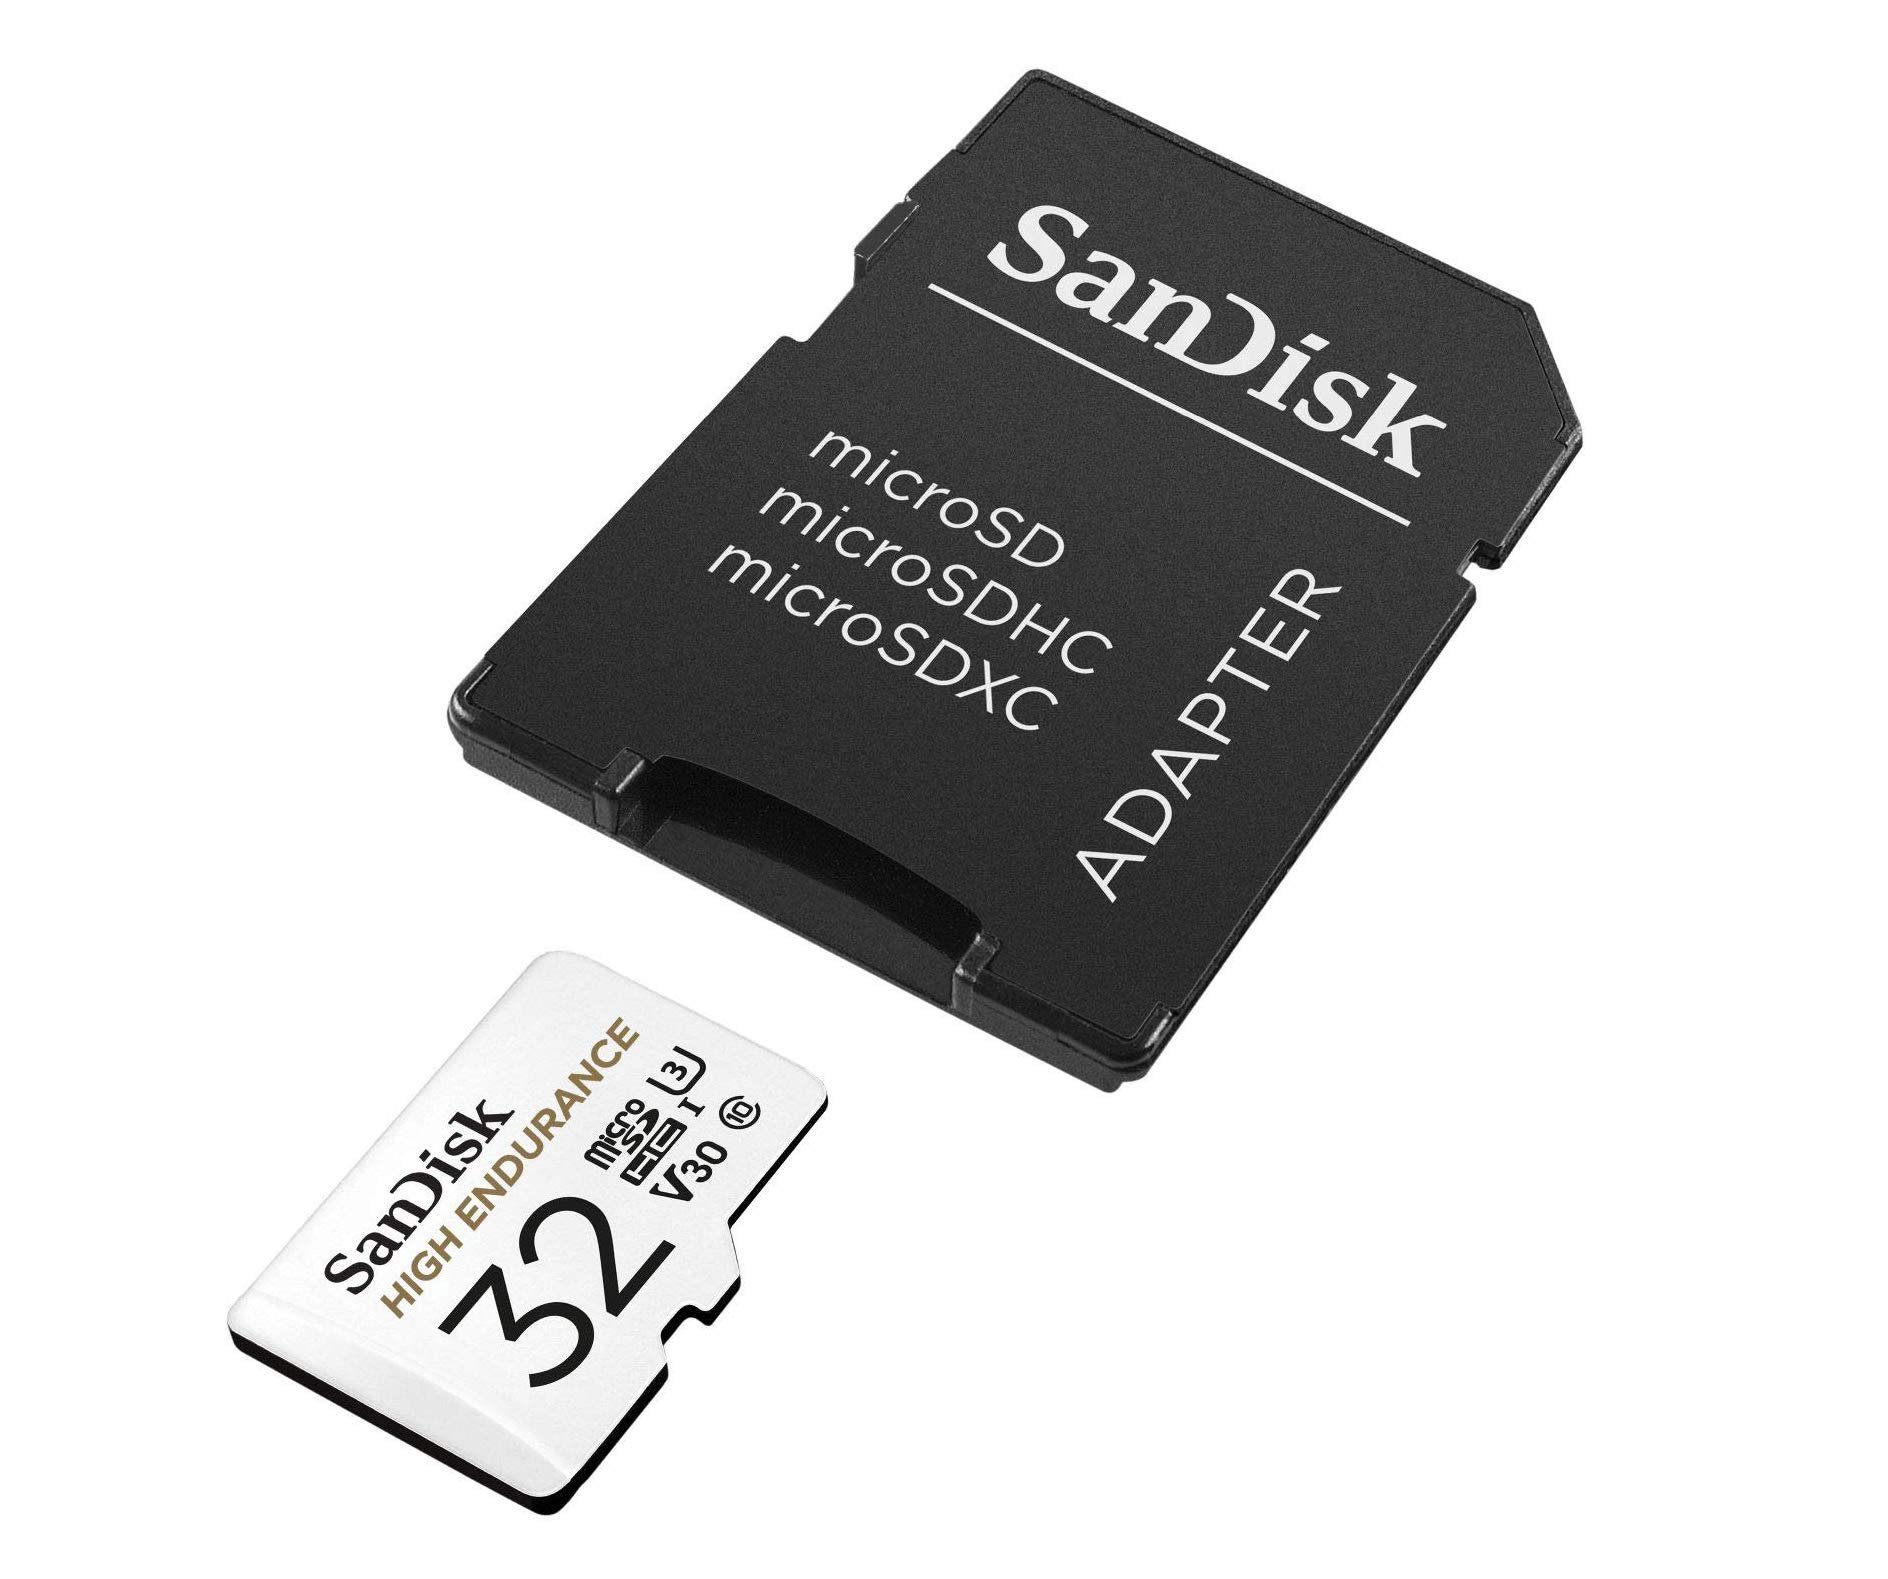 SanDisk High Endurance MicroSDHC Class 10 32GB